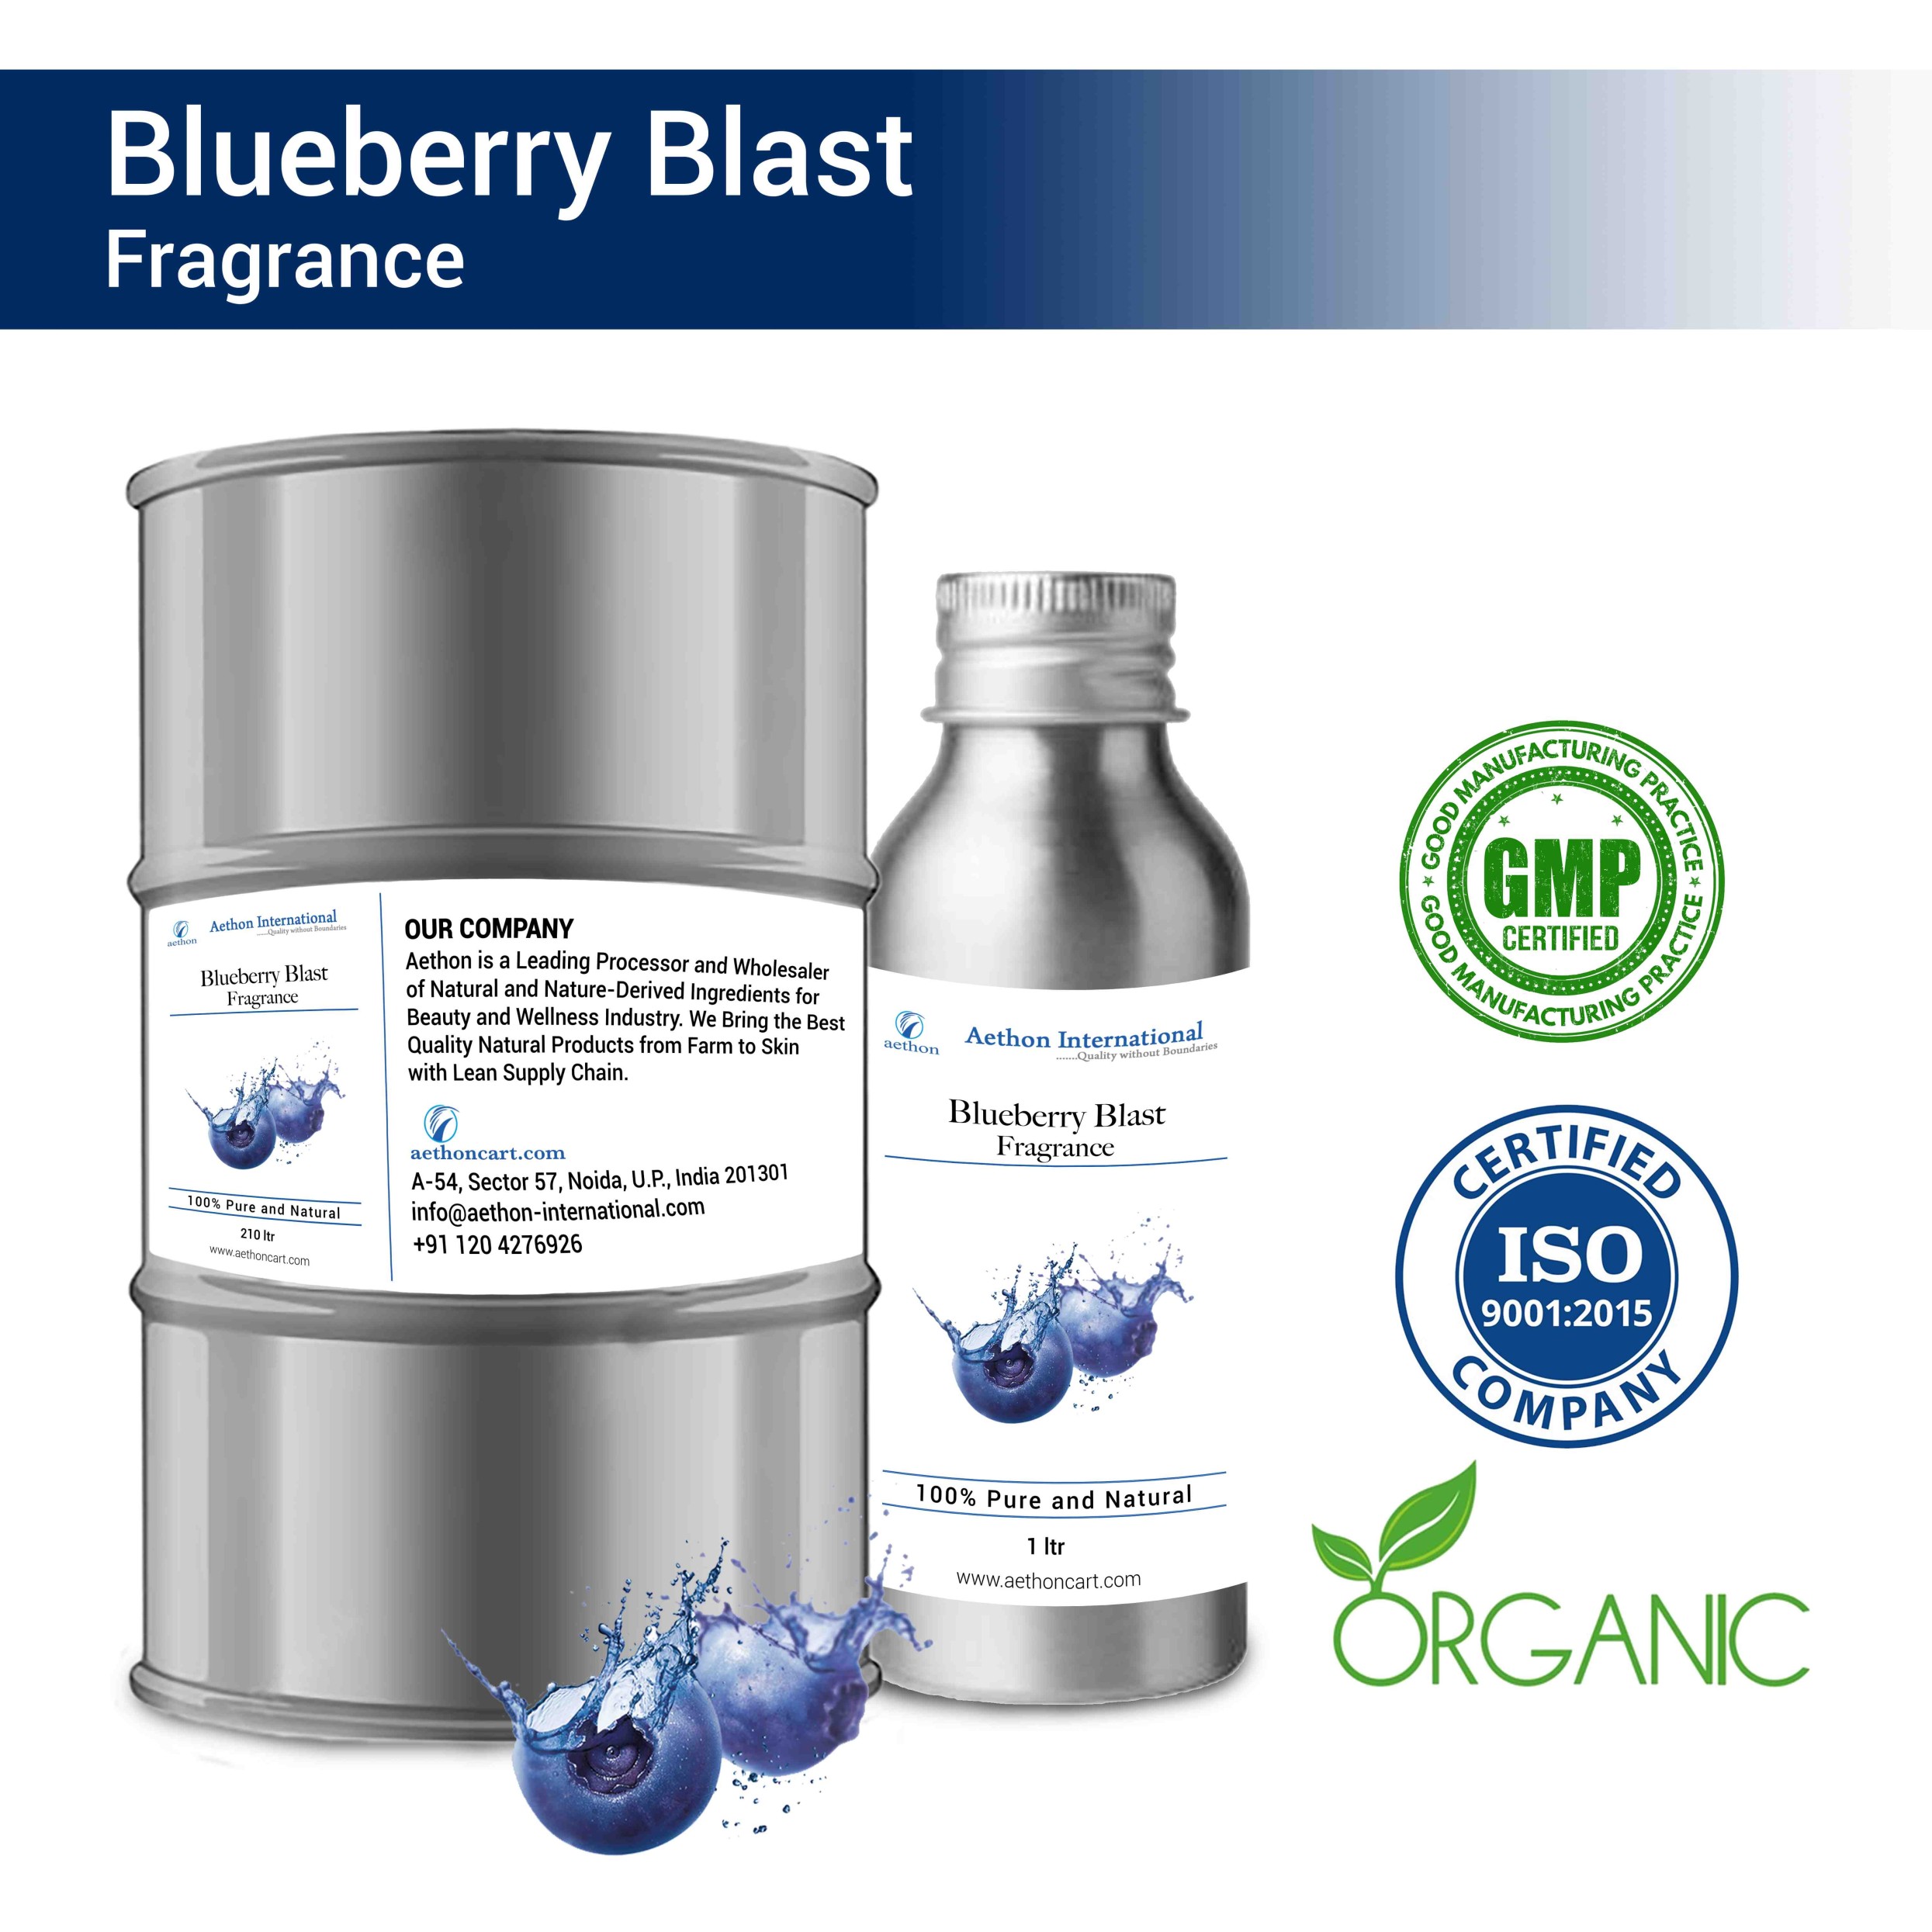 Blueberry Blast Fragrance